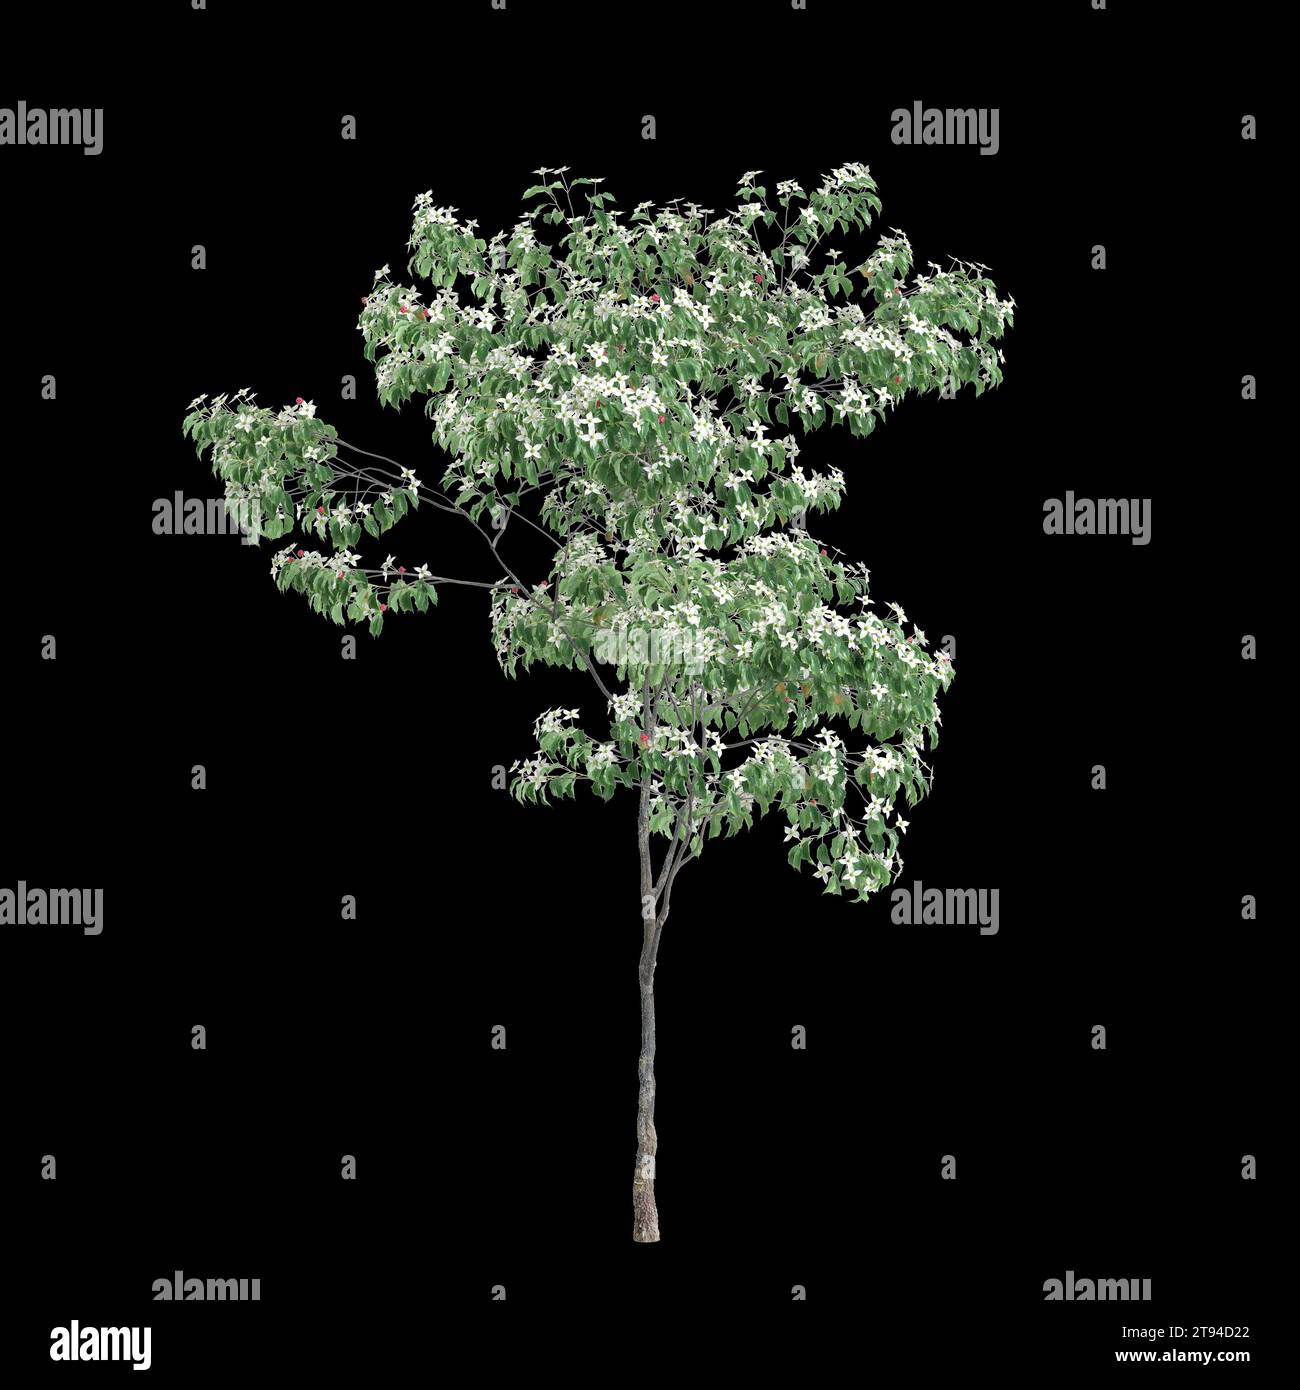 3d illustration of Cornus kousa tree isolated on black background Stock Photo